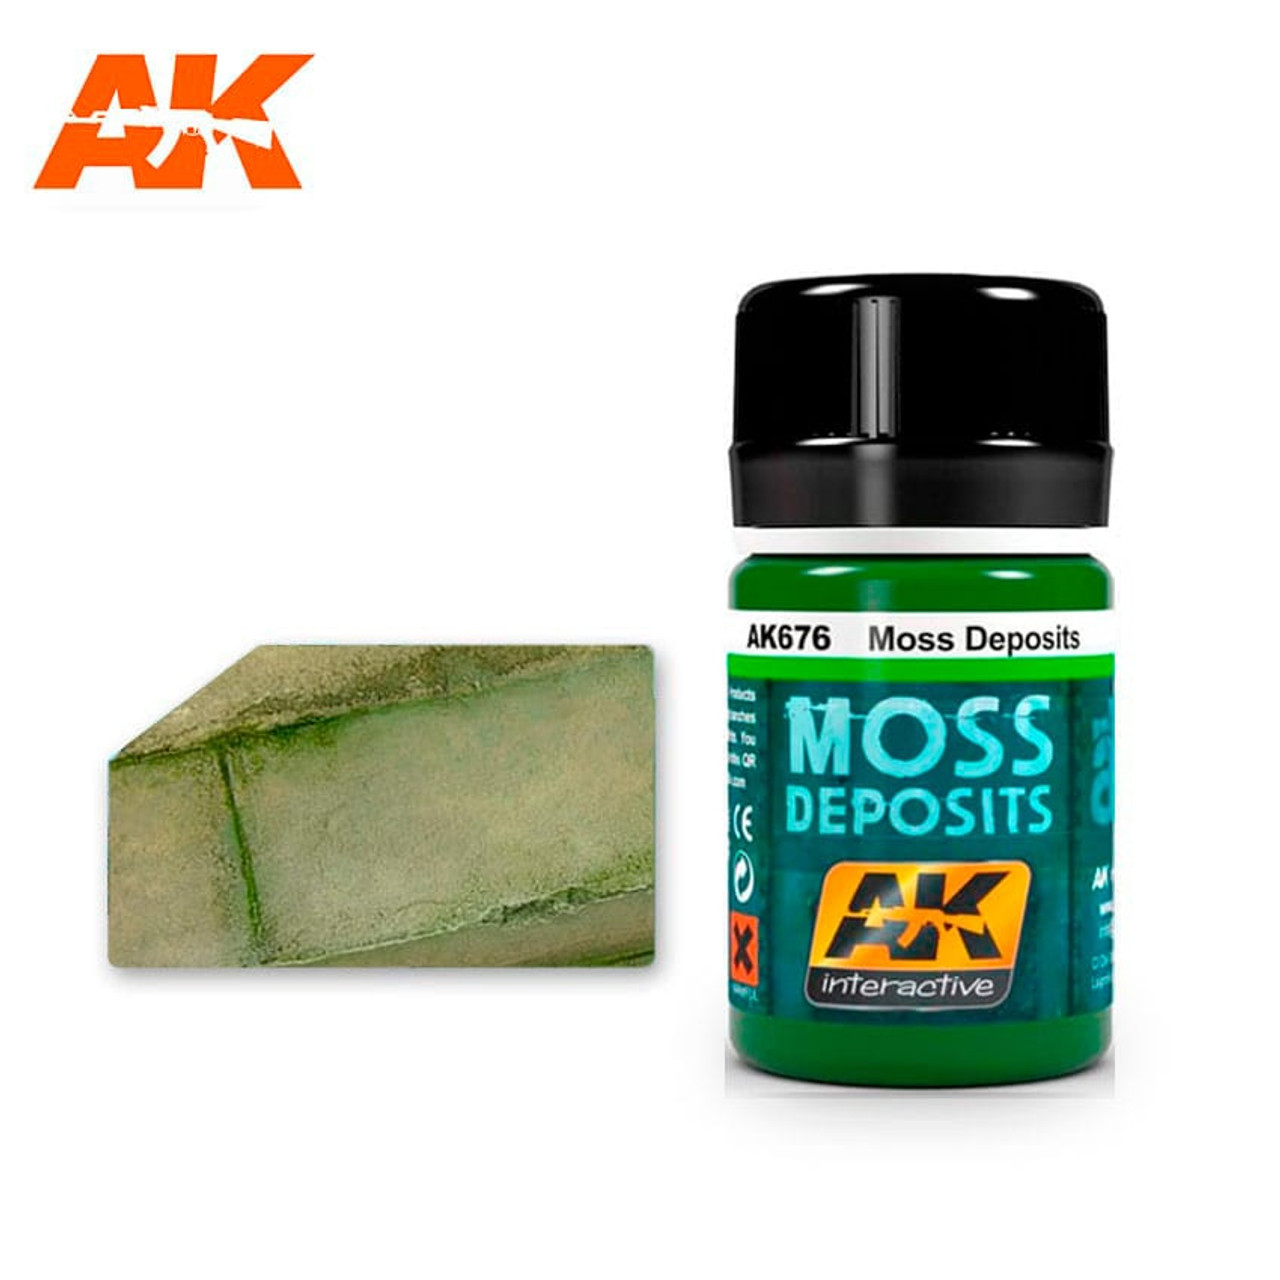 AK Weathering Moss Deposits - AK676